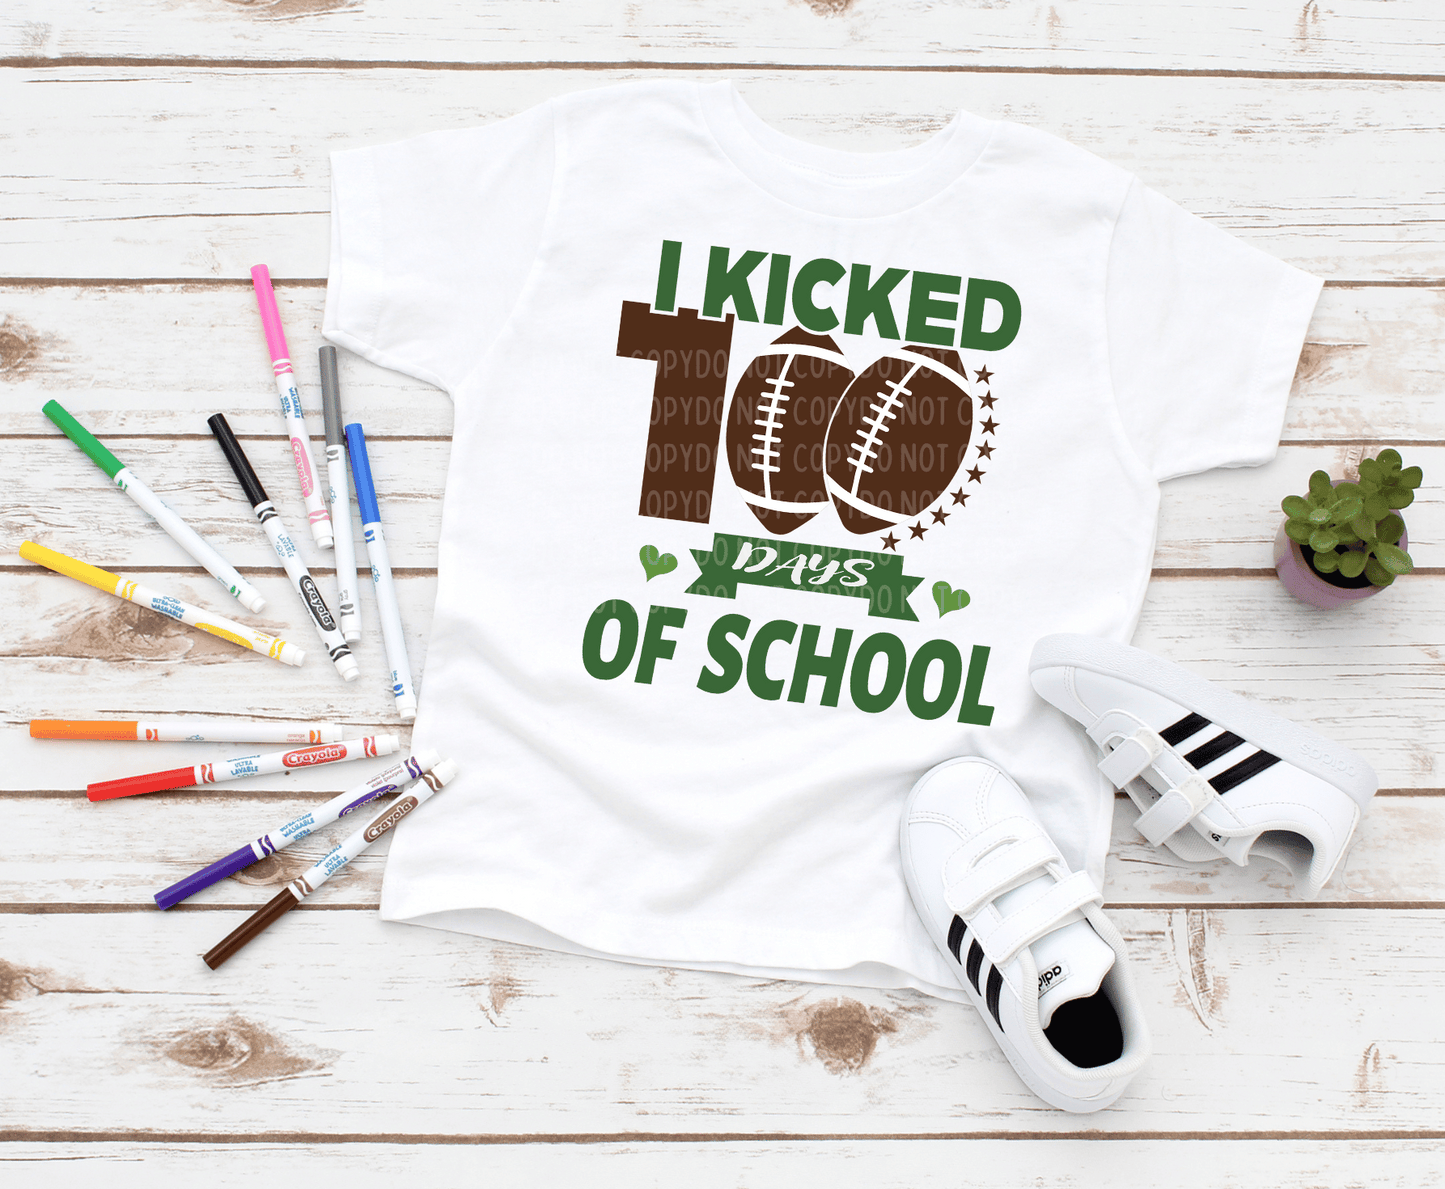 Premade Gang Sheet | Boys 100 Days Of School